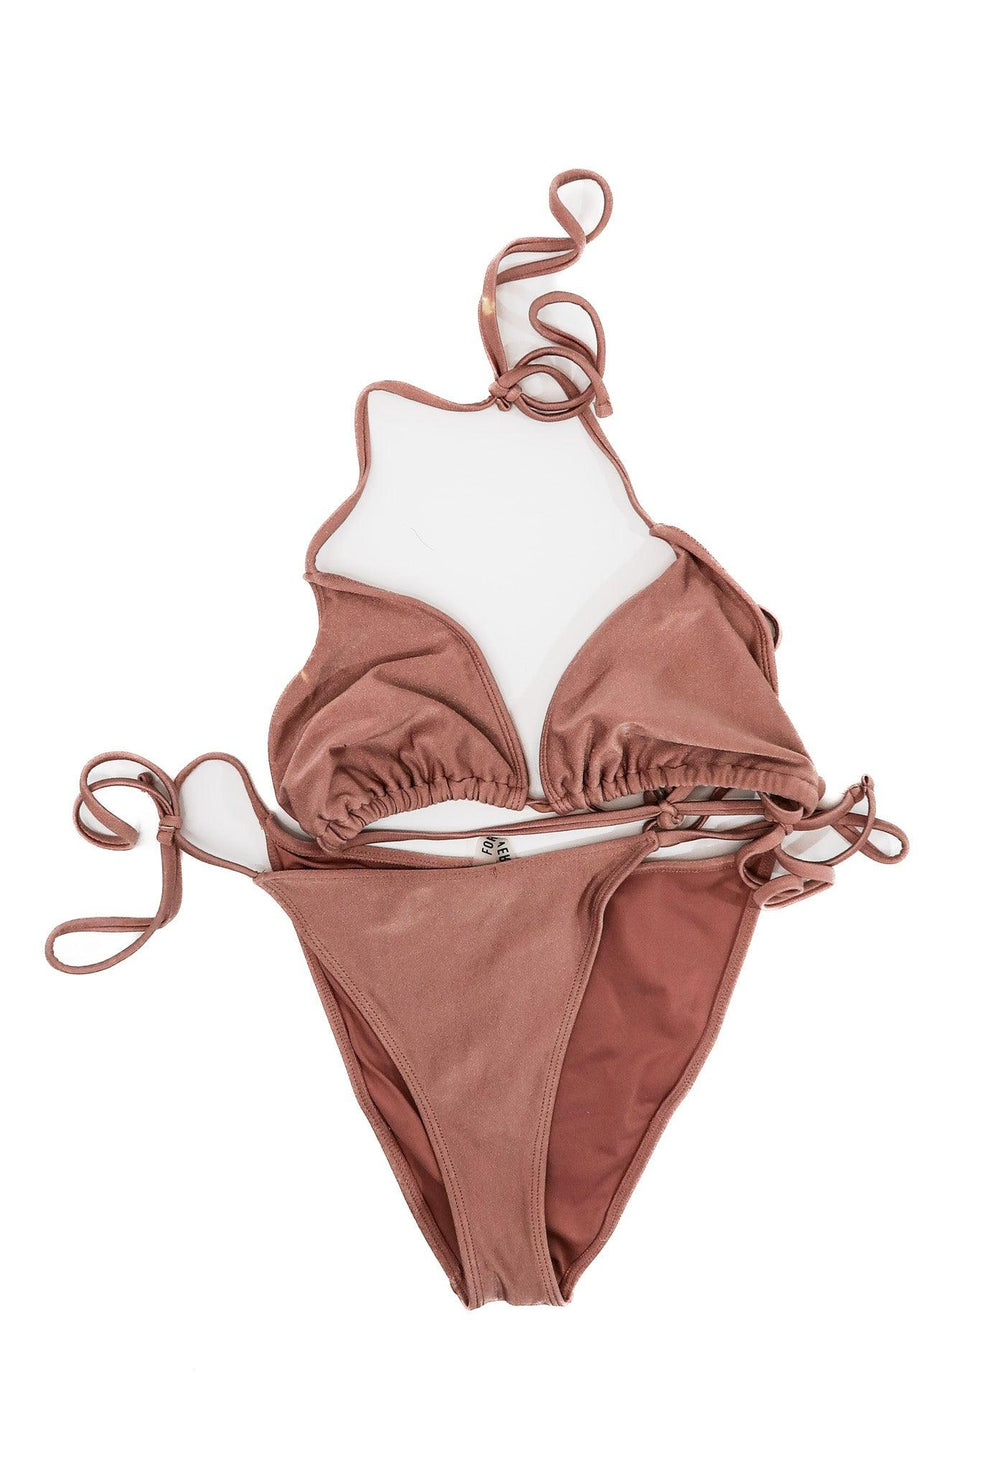 Natasha Nice Light Brown String Bikini - FANS UTOPIA